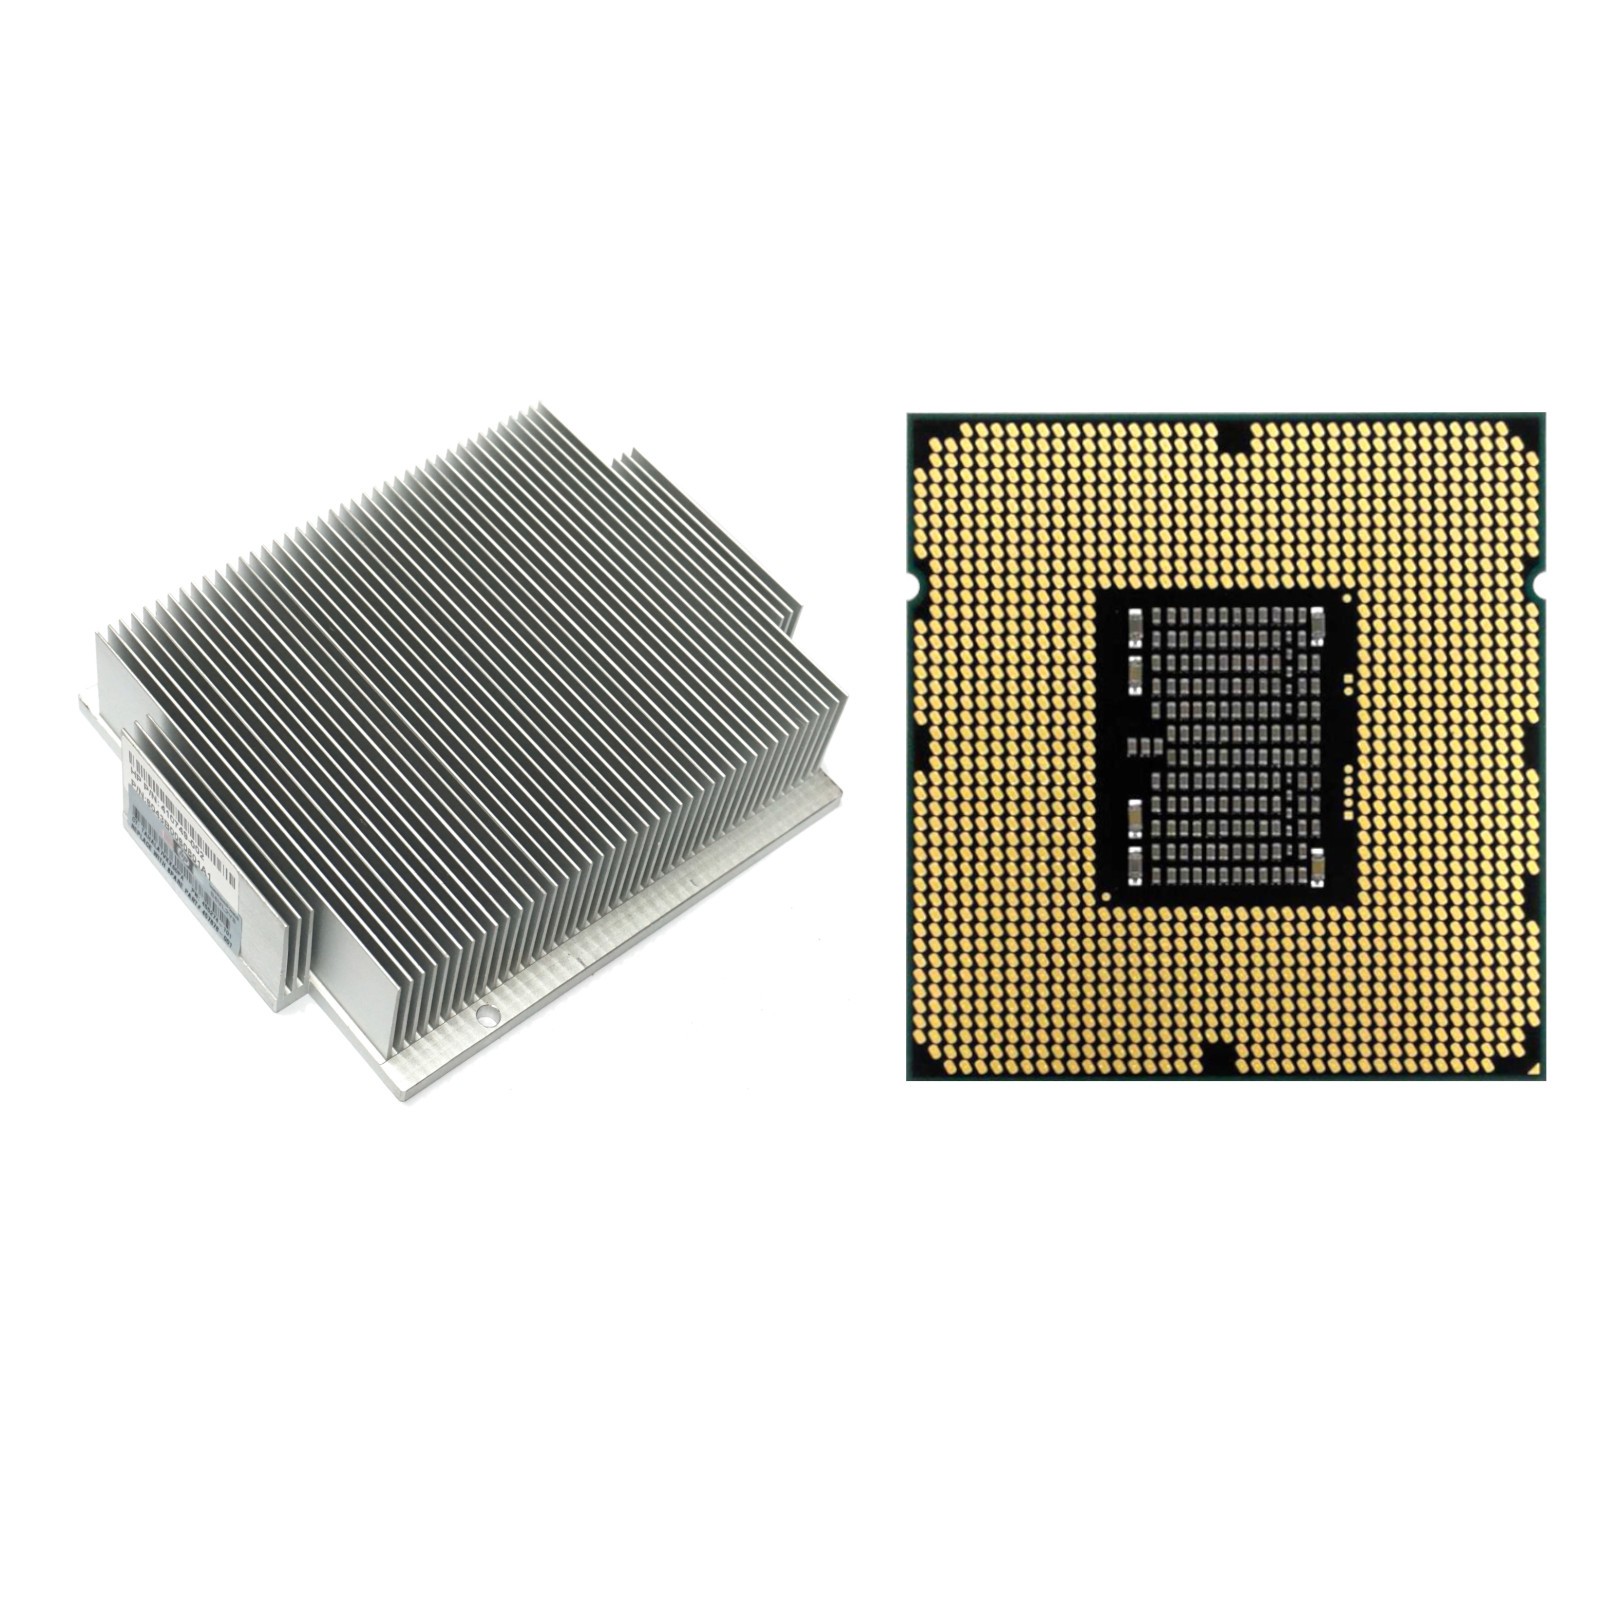 HP (416567-B21) ProLiant DL360 G5 - Intel Xeon 5110 CPU2 Kit